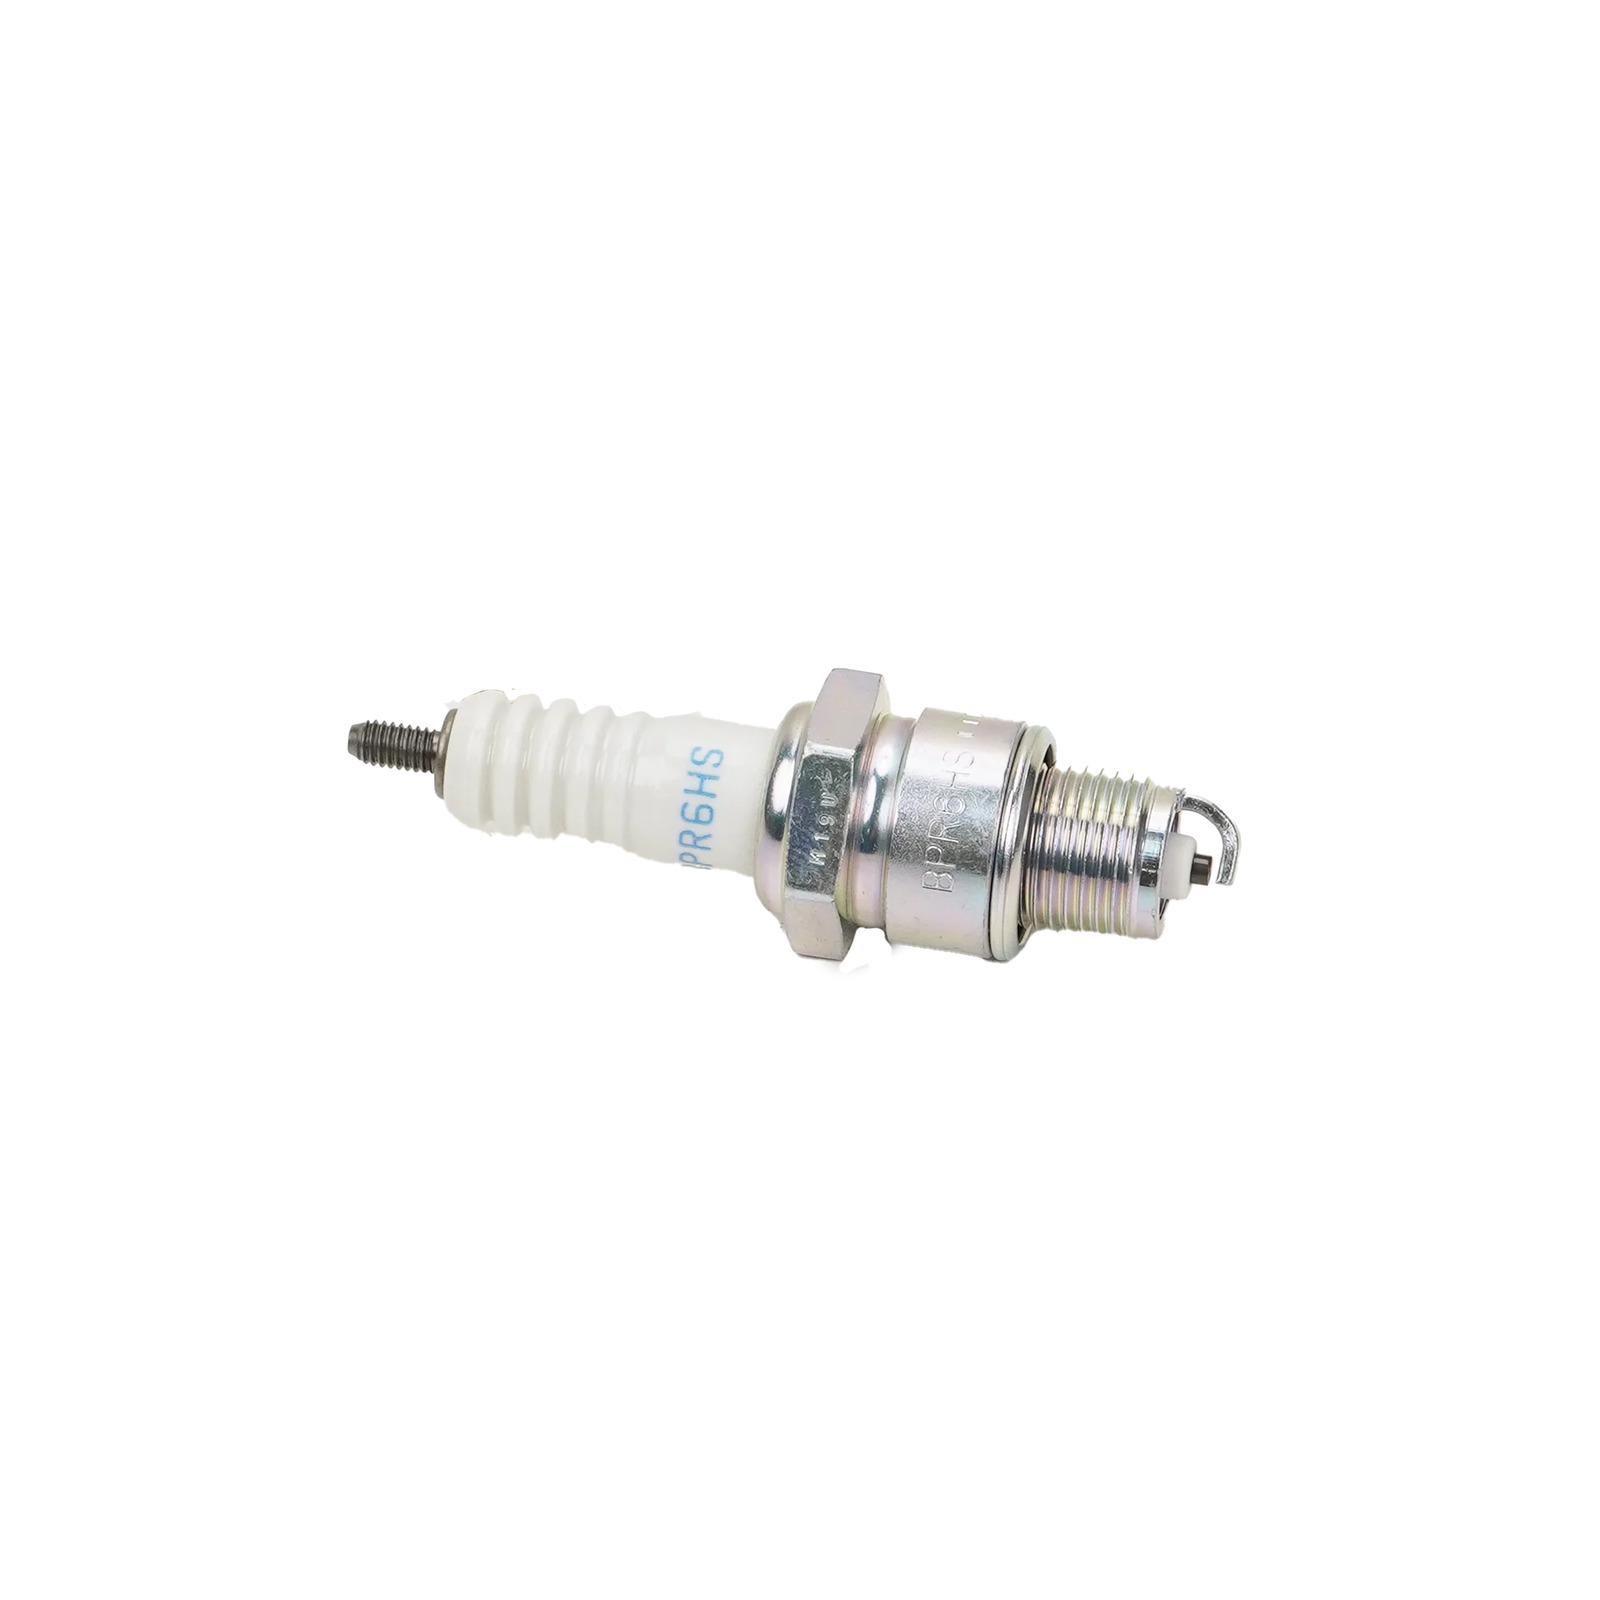 Honda Spark Plug (Bpr5Es) 98076-56717